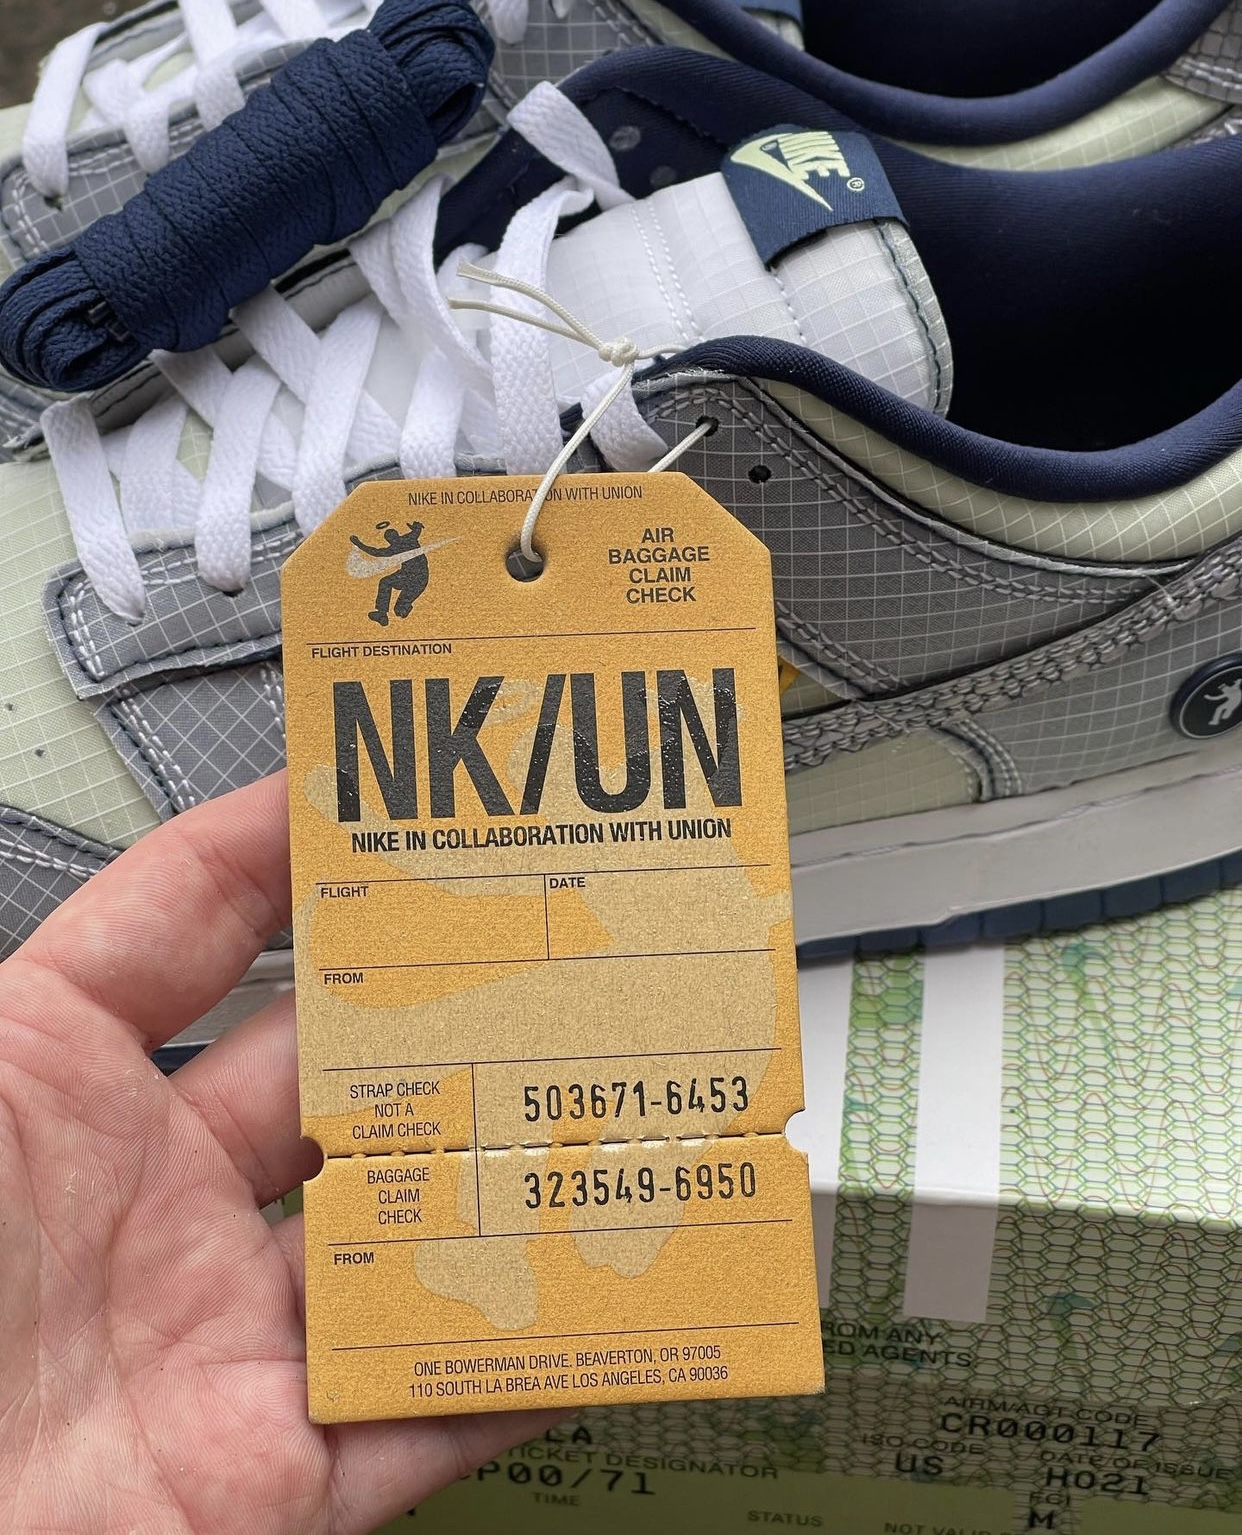 Union Nike Dunk Low Midnight Navy Marine Minuit DJ9649-401 Release Date